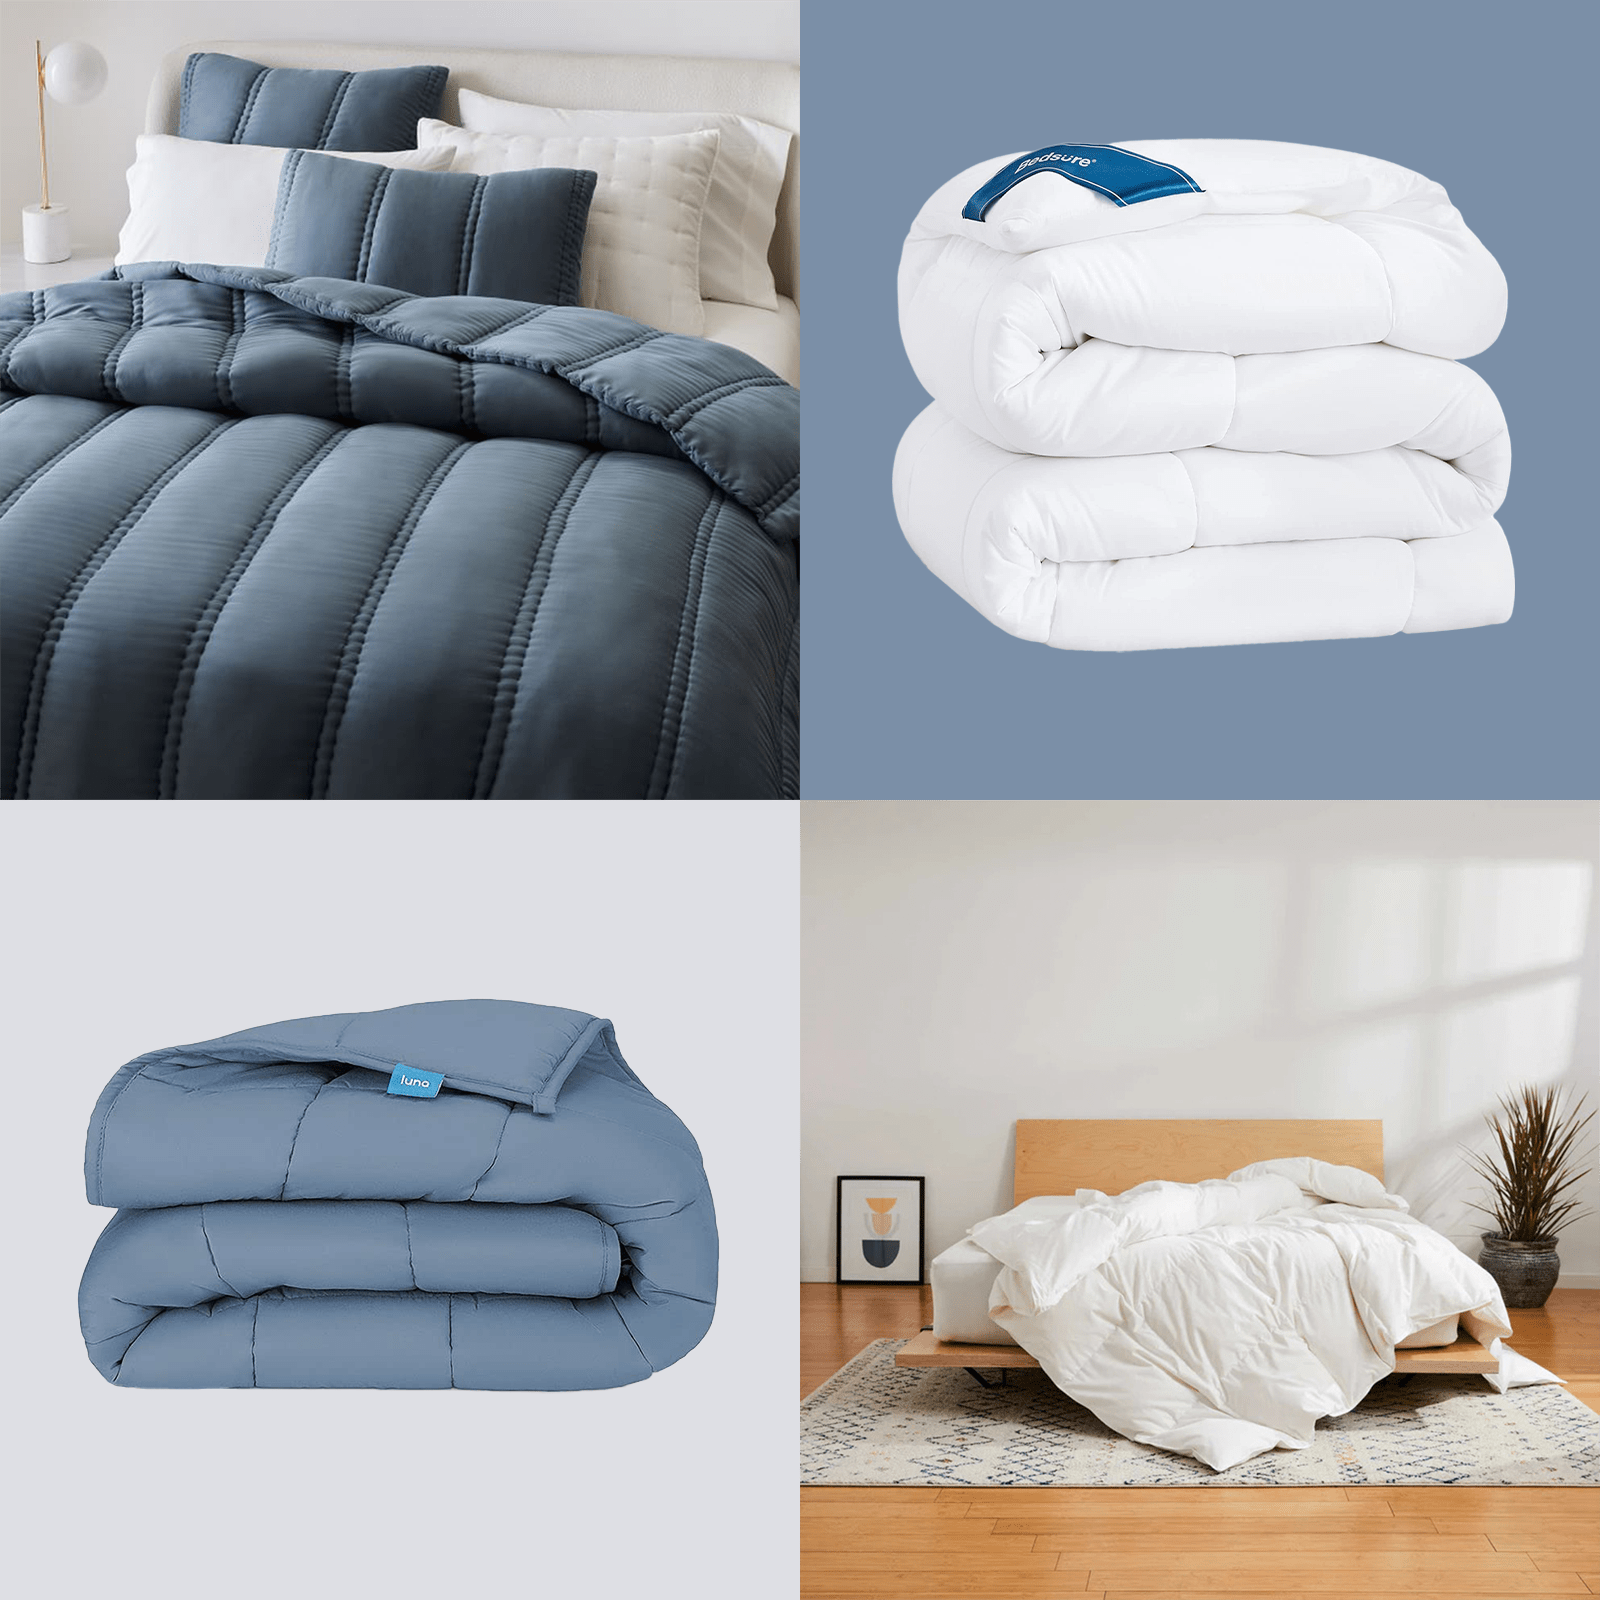 Big Blanket Co - Comfort level: 100 square feet. Bestselling